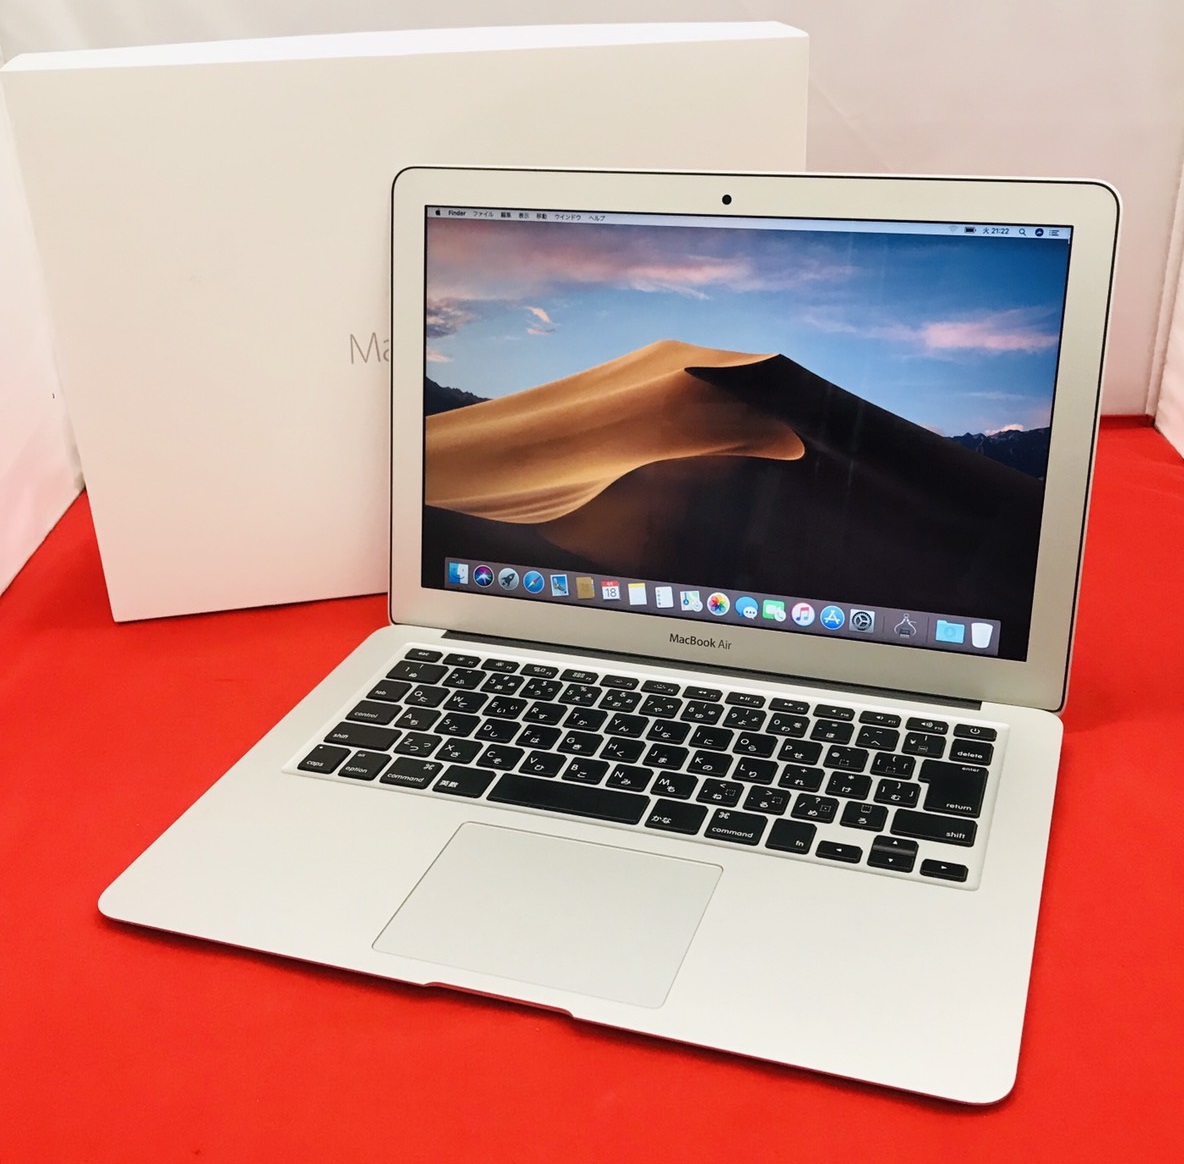 Apple MacBook Air (13インチー2017)128GB